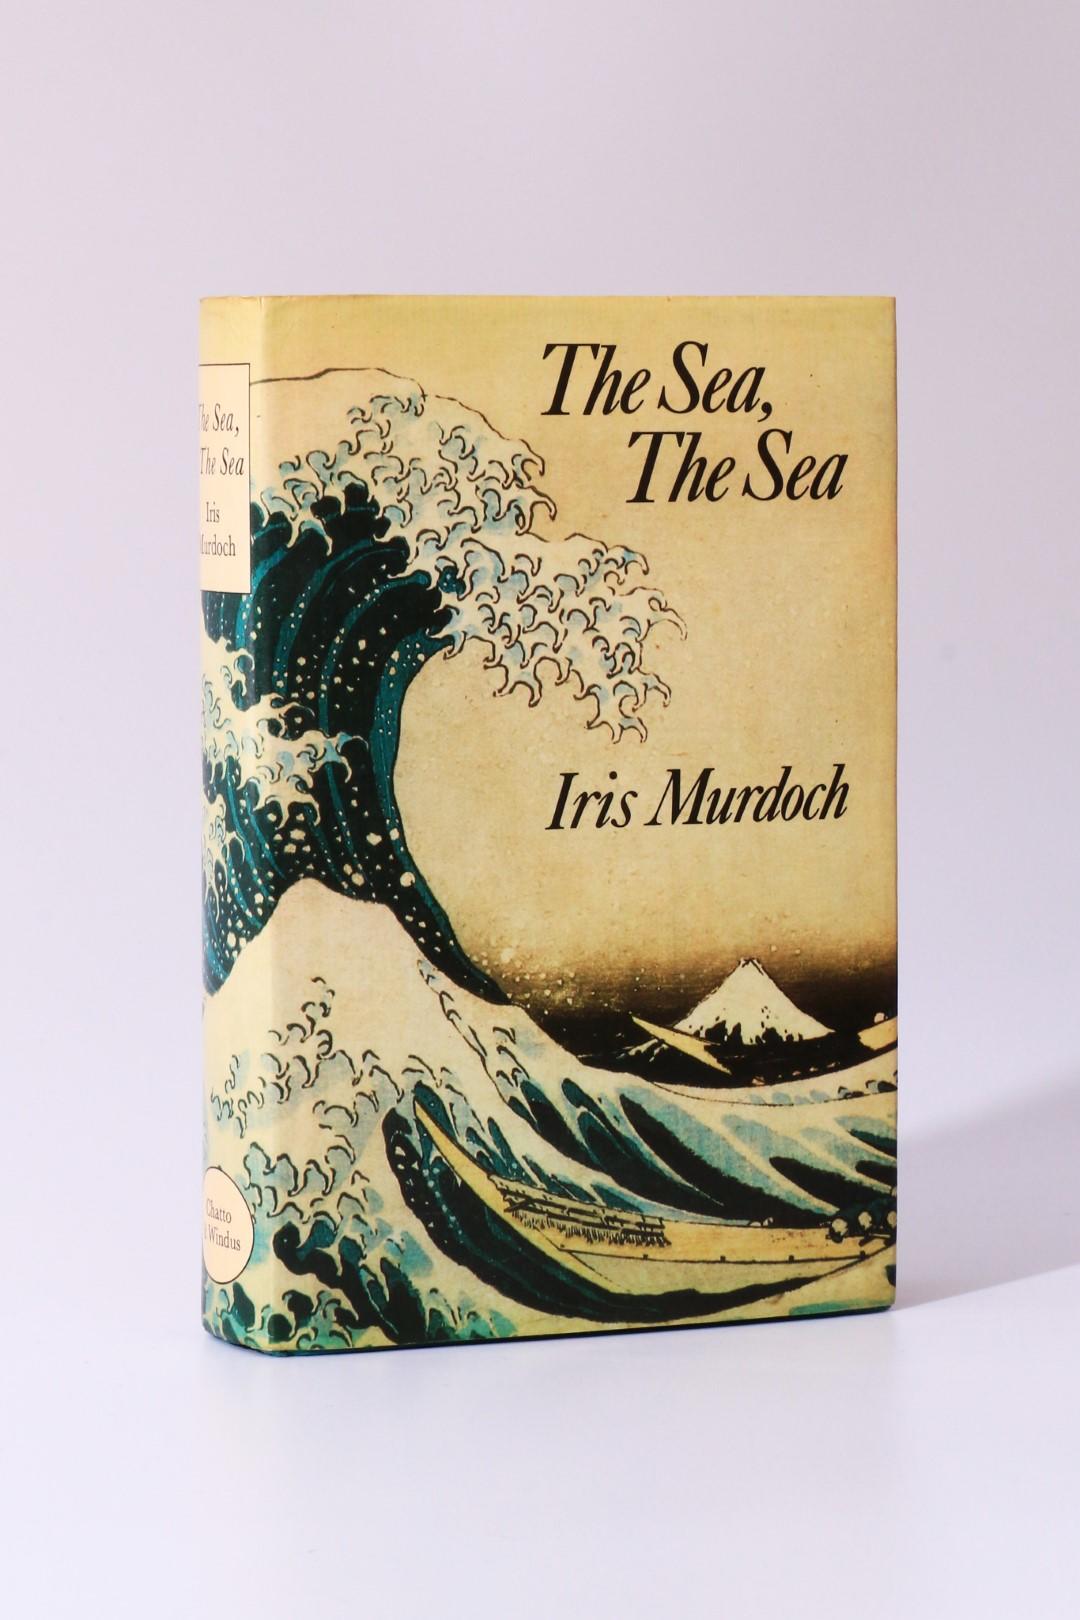 Iris Murdoch - The Sea, The Sea - Chatto & Windus, 1978, First Edition.